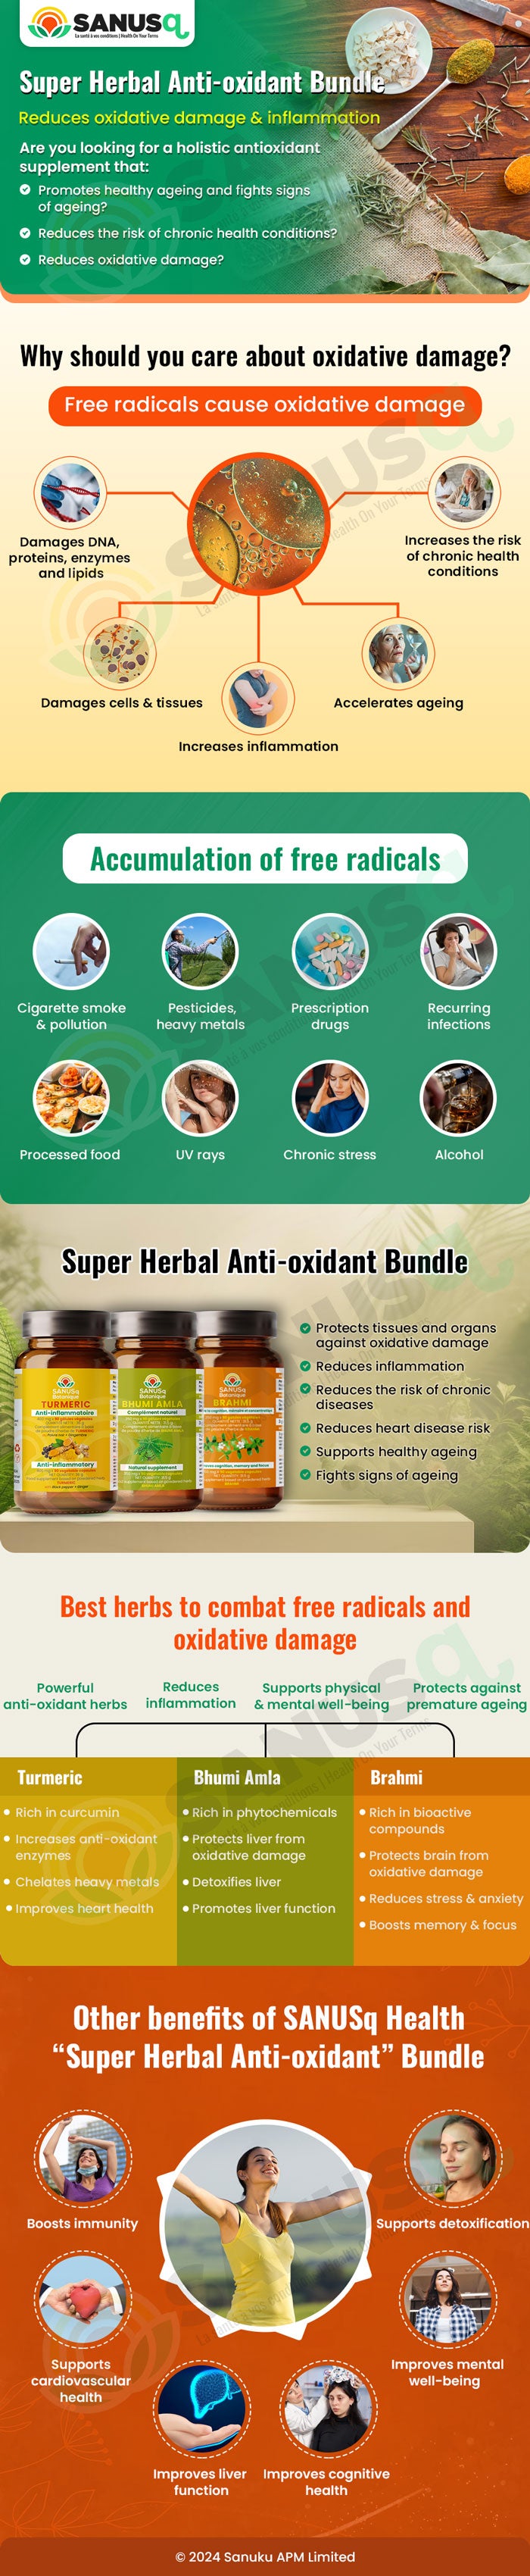 Super Herbal Anti-oxidant Bundle